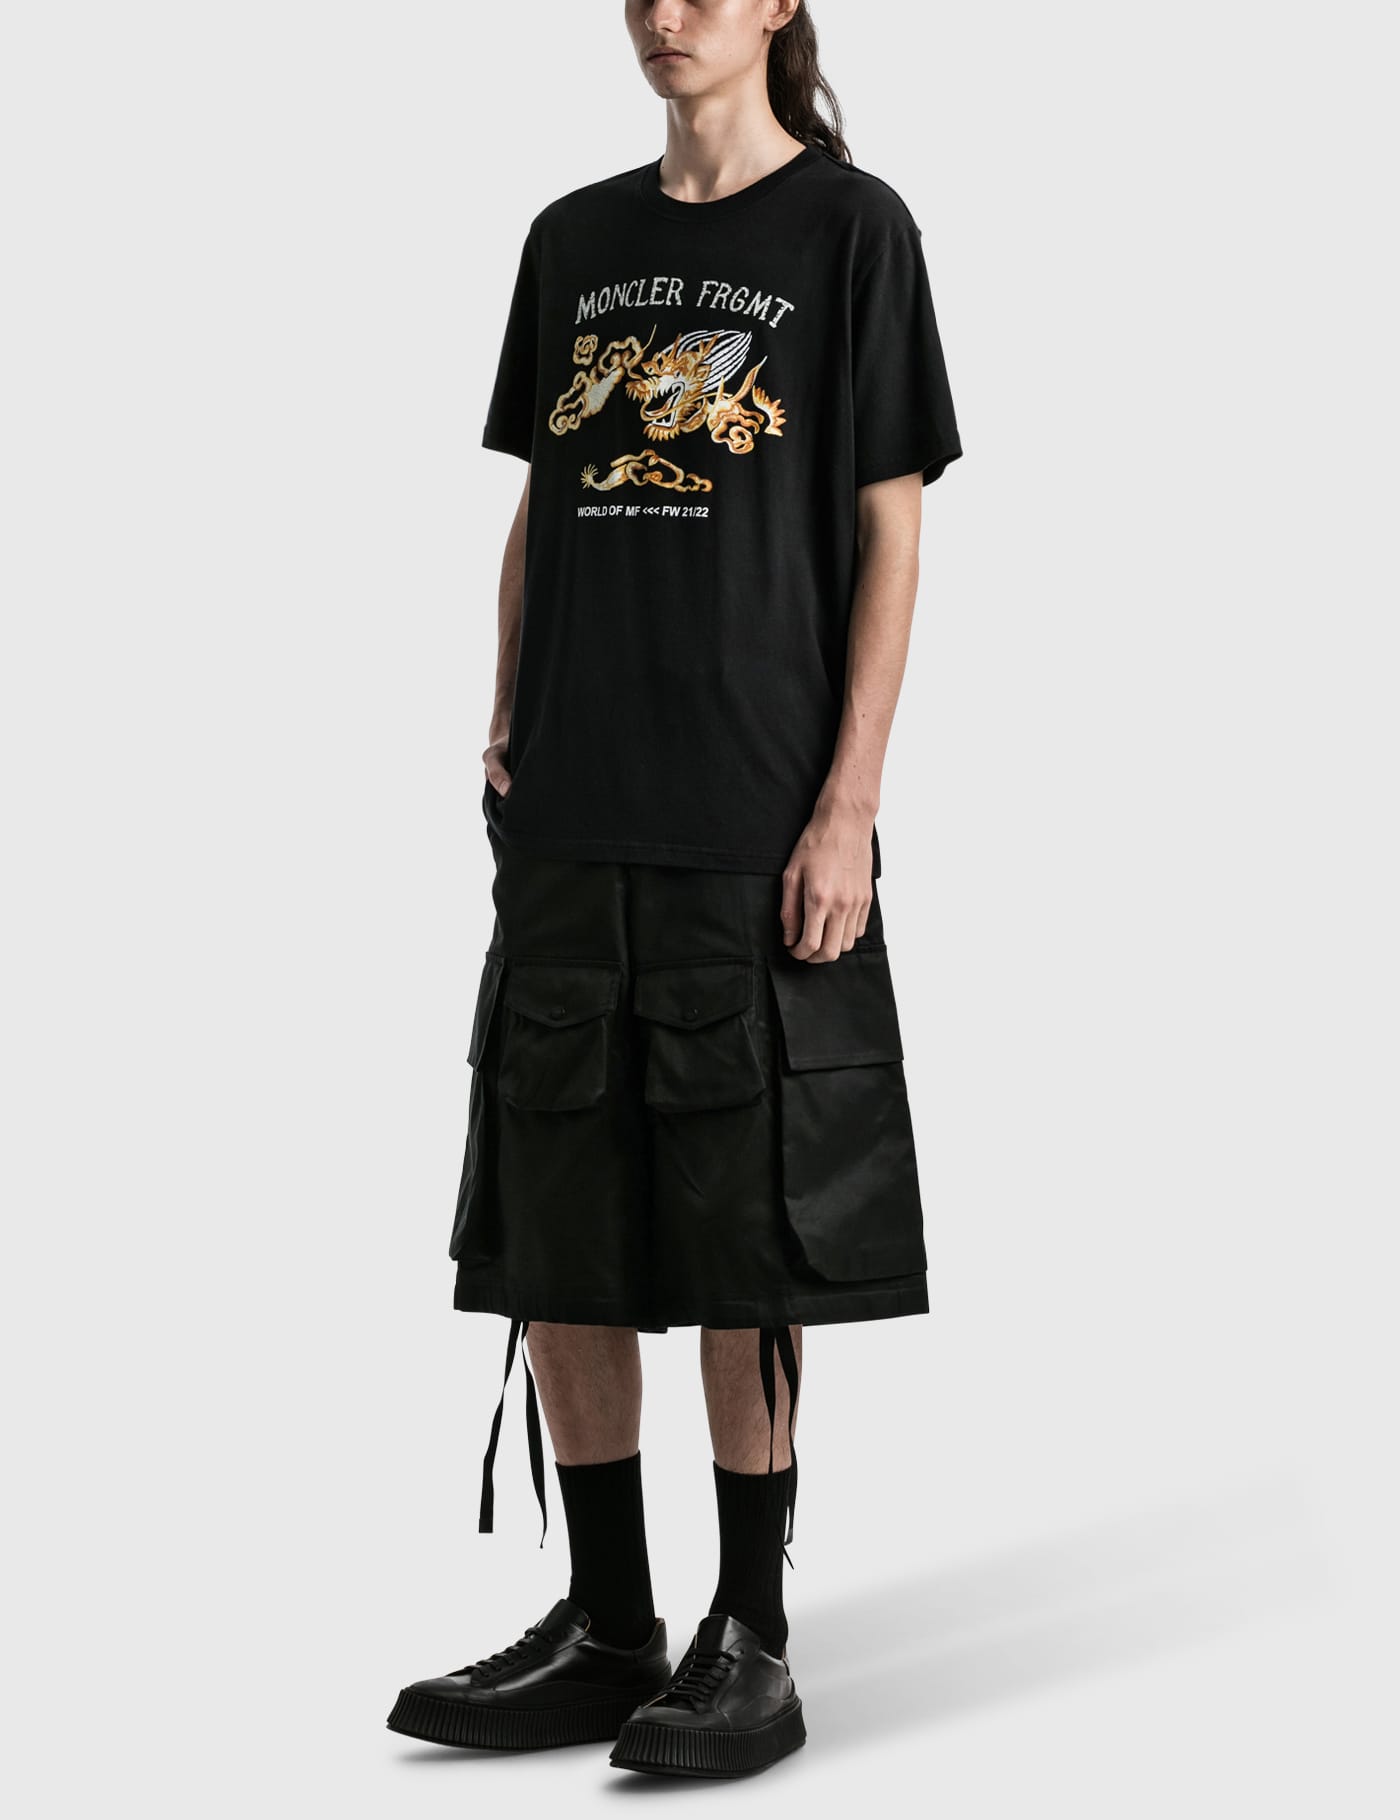 Moncler Genius - 7 Moncler Frgmt Hiroshi Fujiwara T-shirt | HBX 